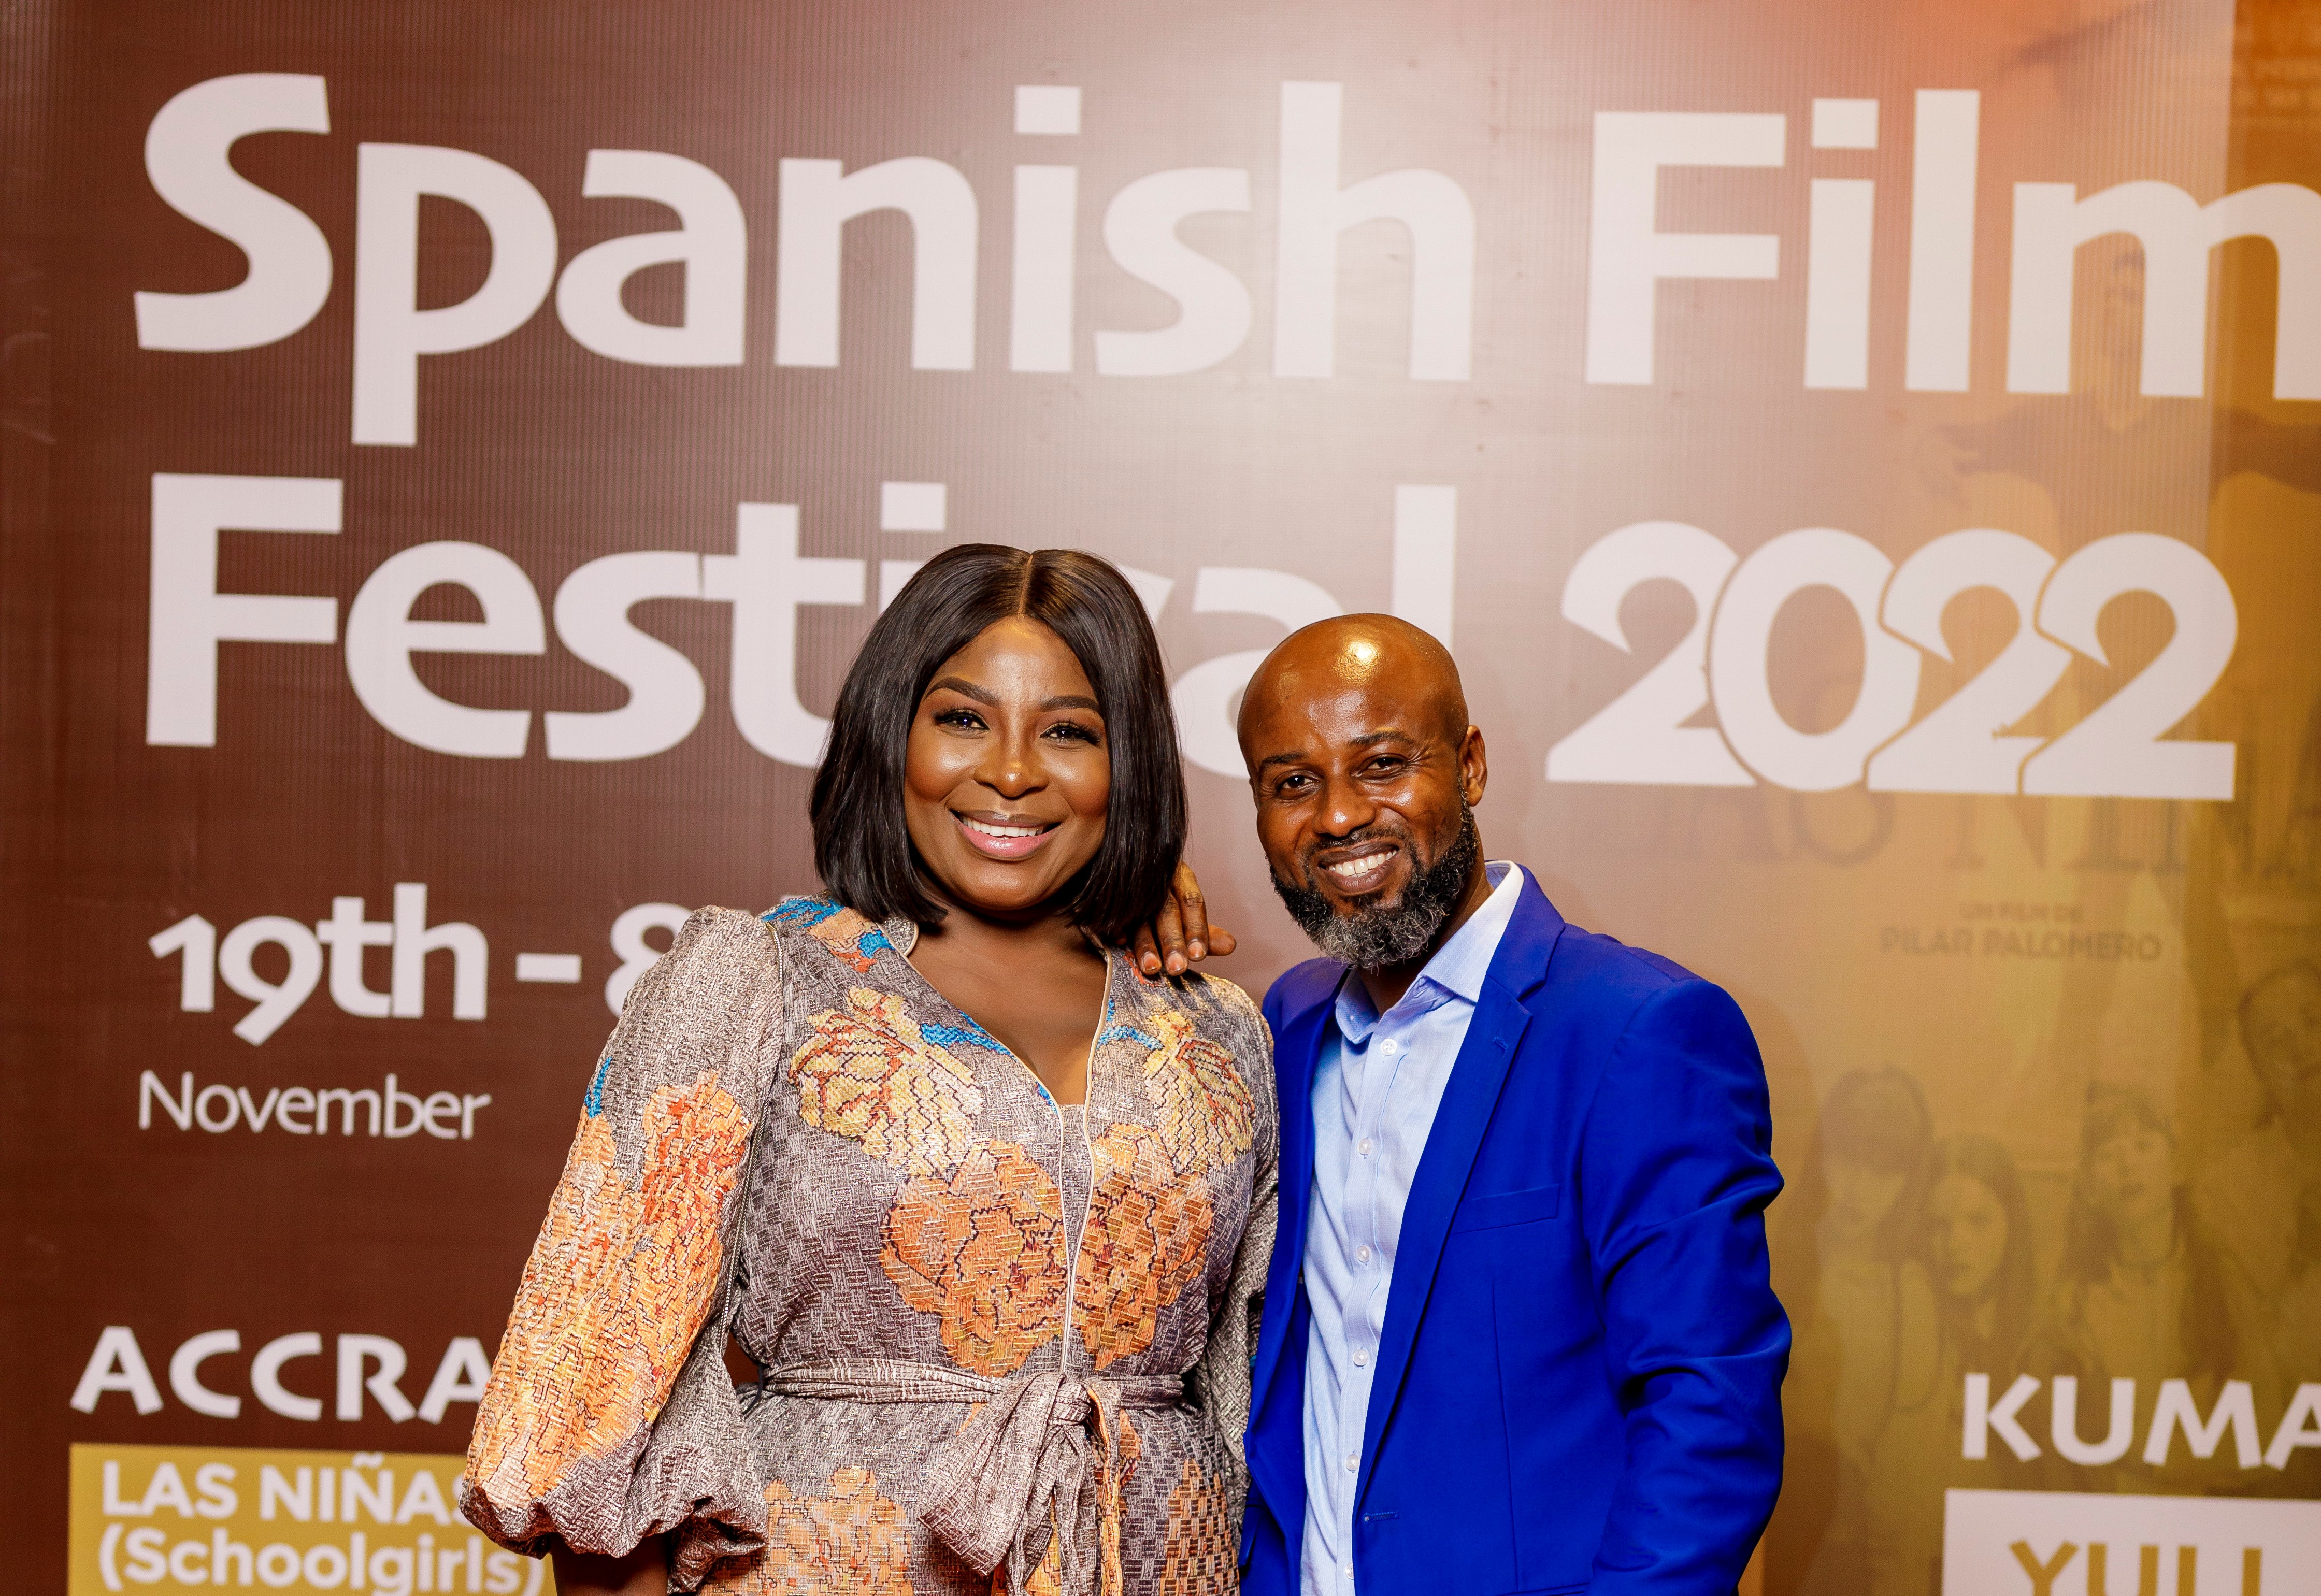 Spanish Film Festival train stops in Kumasi and Tamale